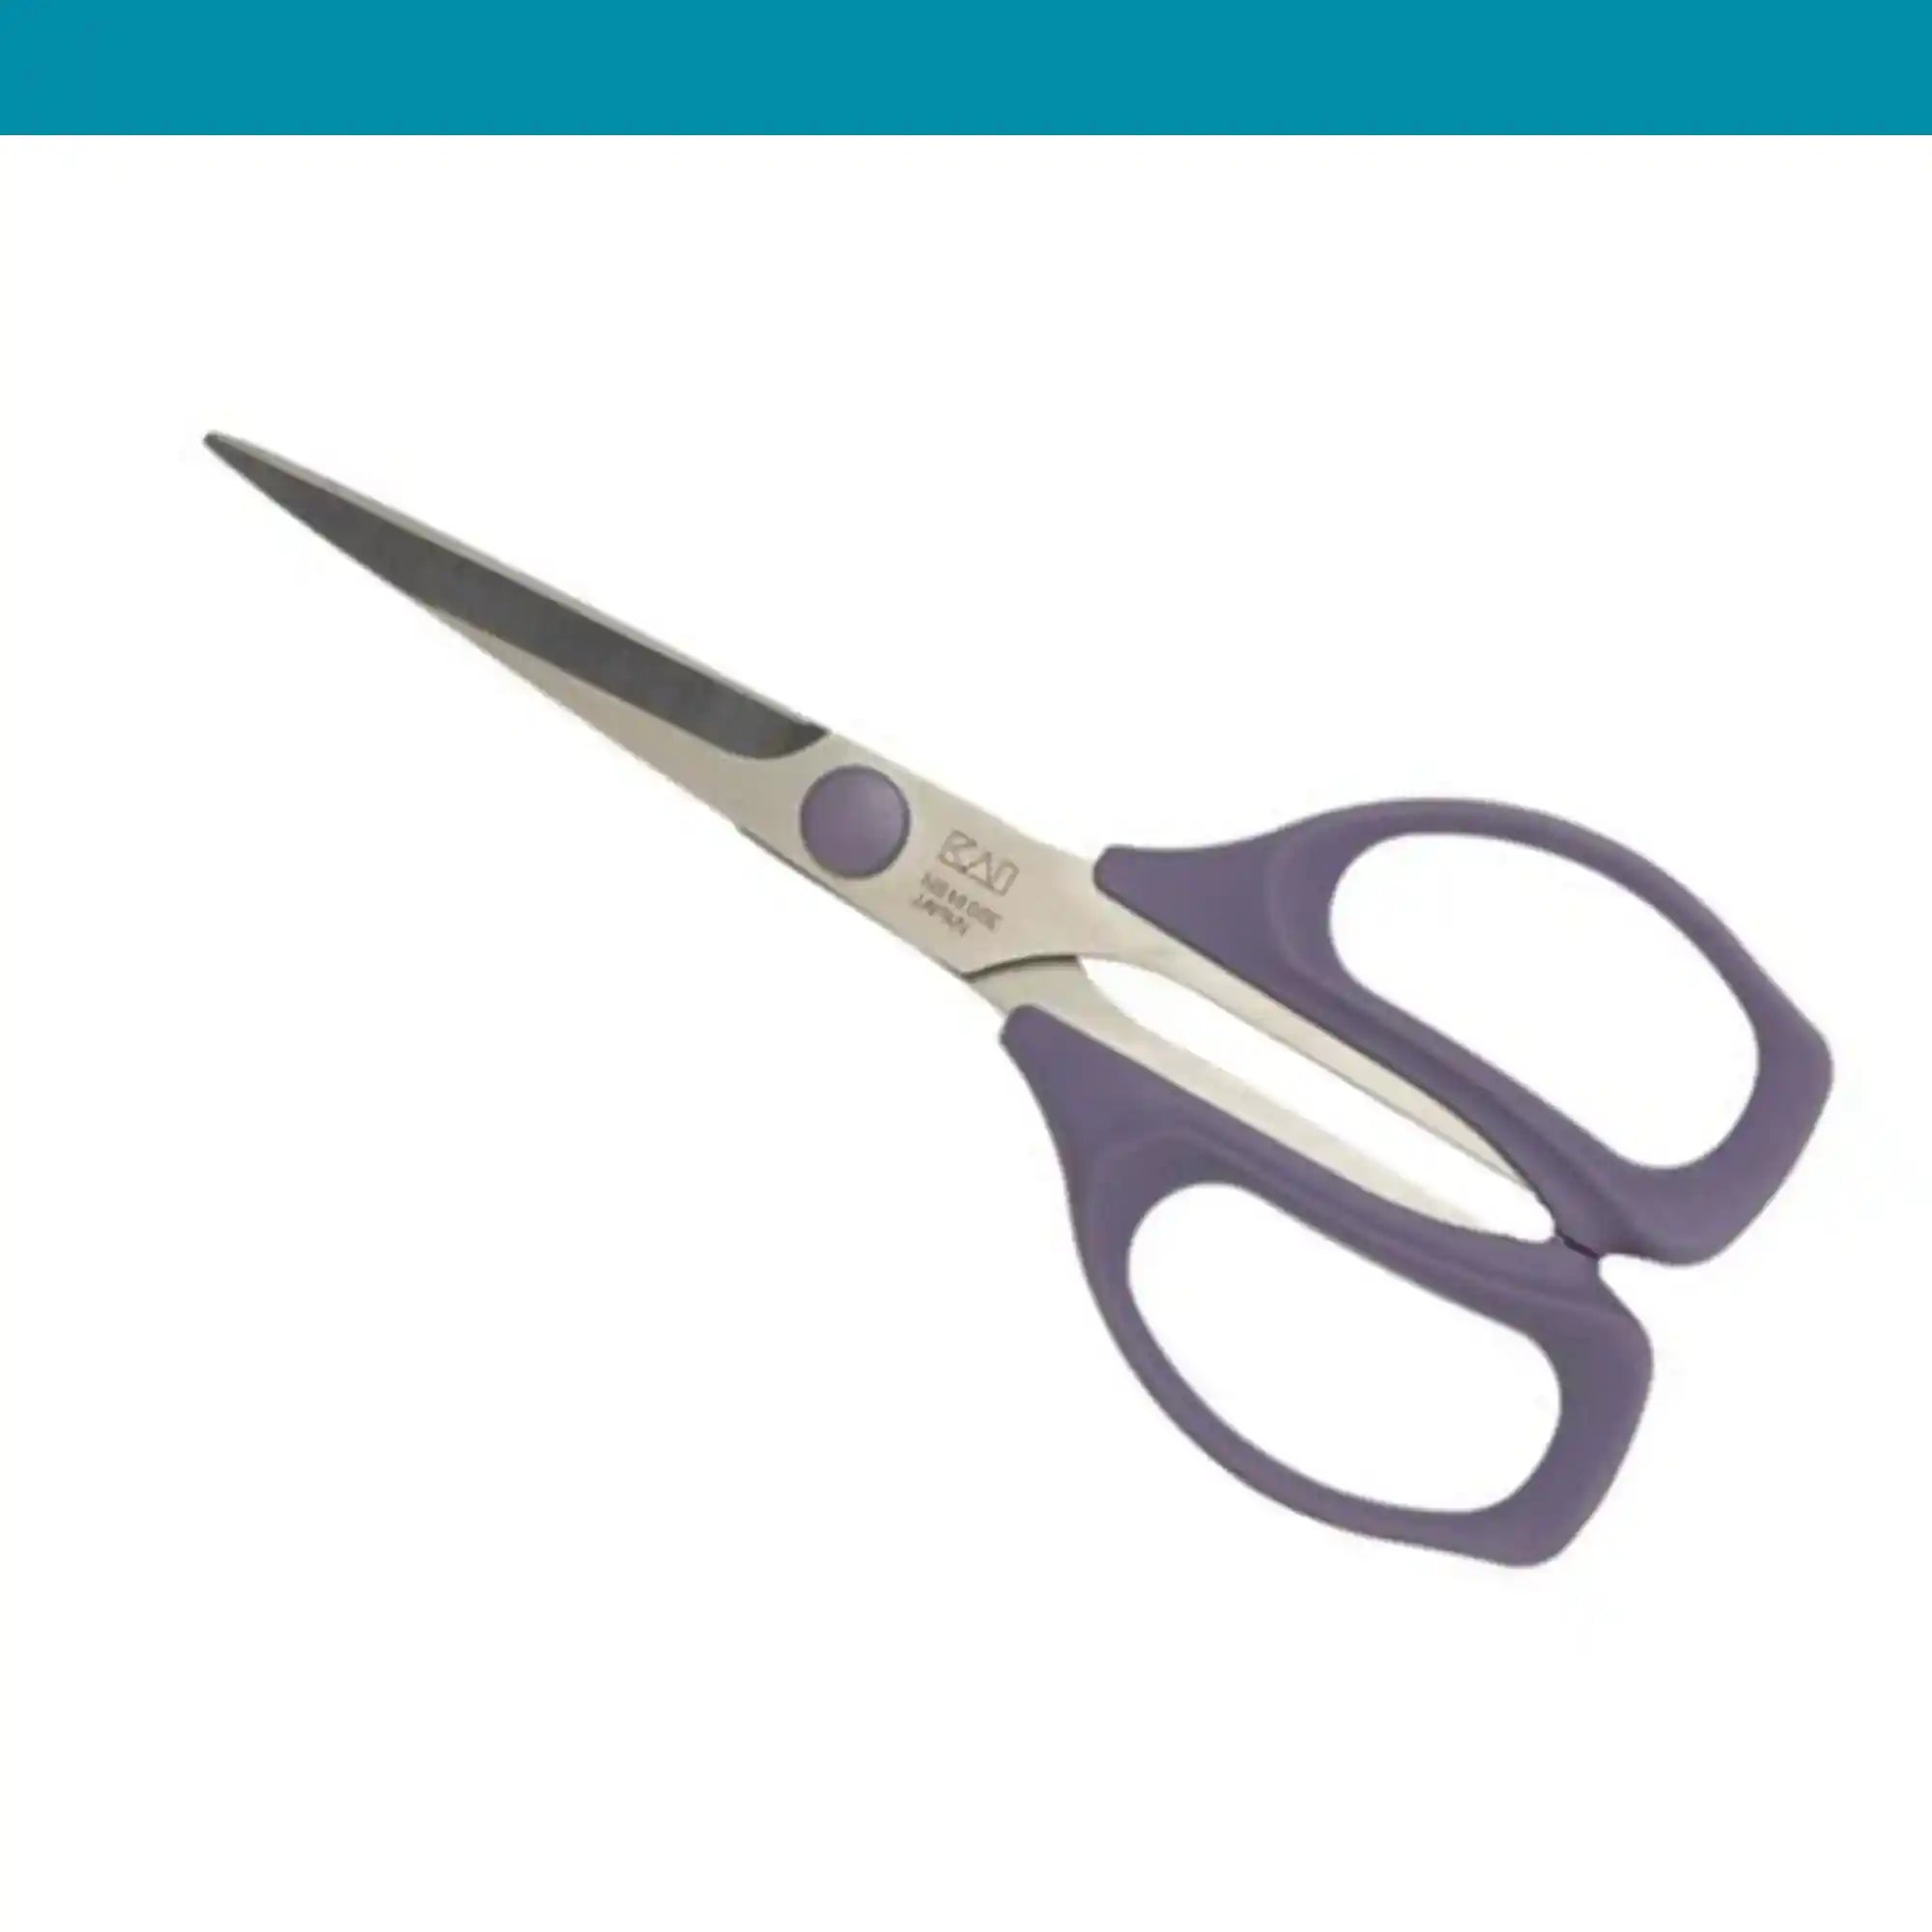 Kai 3160se Patchwork serrated scissors 160 mm